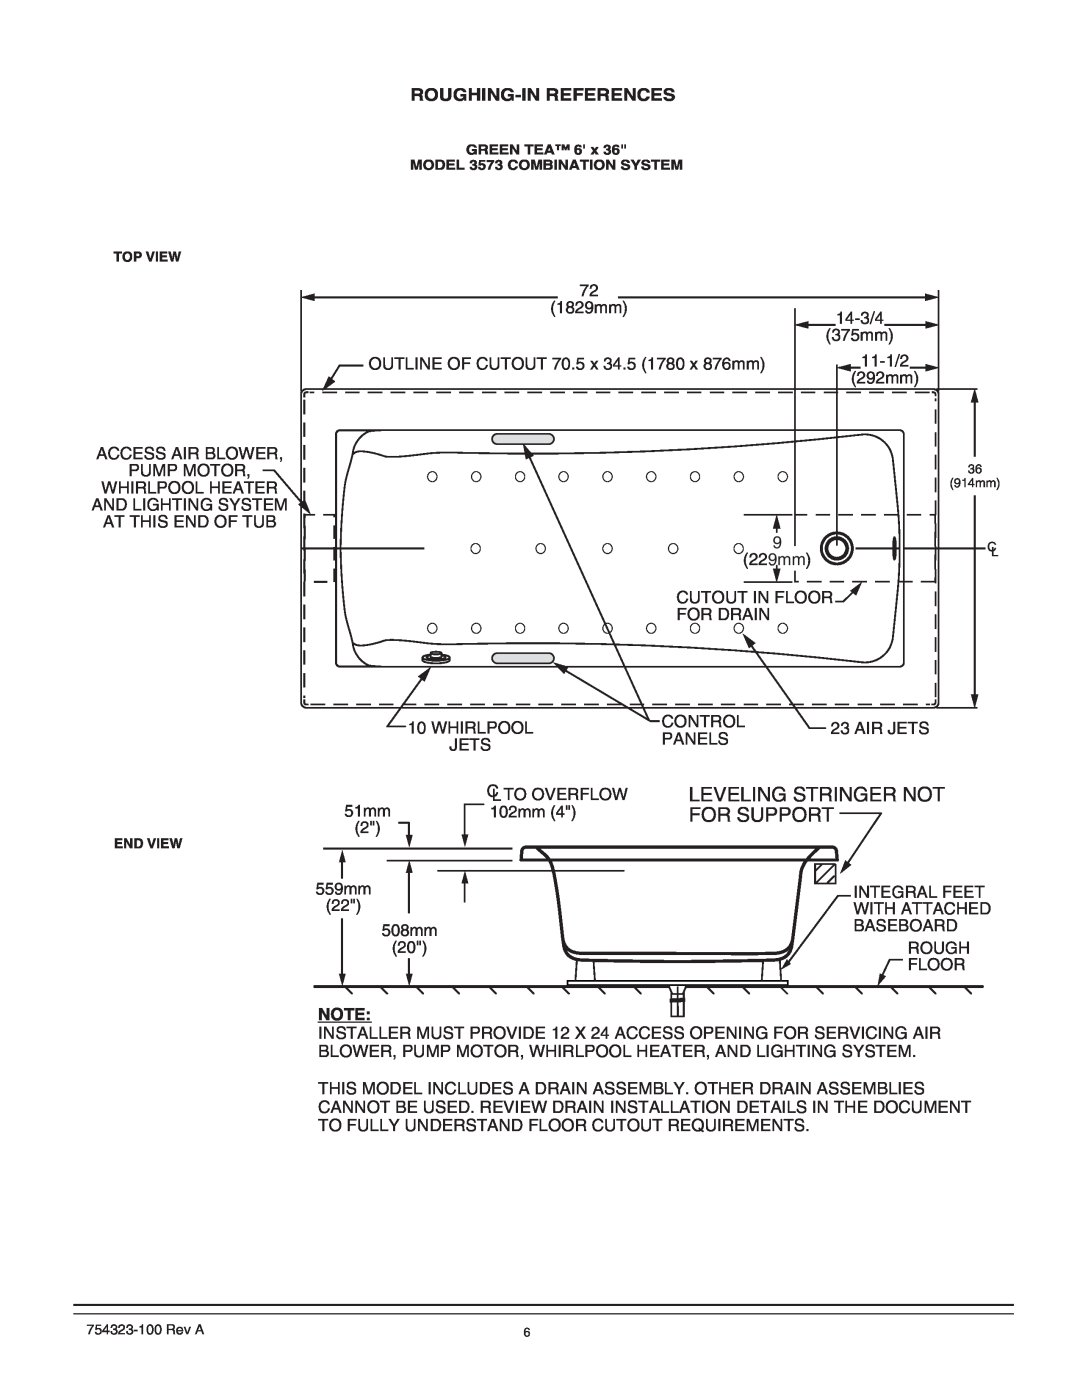 American Standard American Standard bath, 754323-100 Rev A manual Roughing-Inreferences, 72 1829mm 14-3/4 375mm 